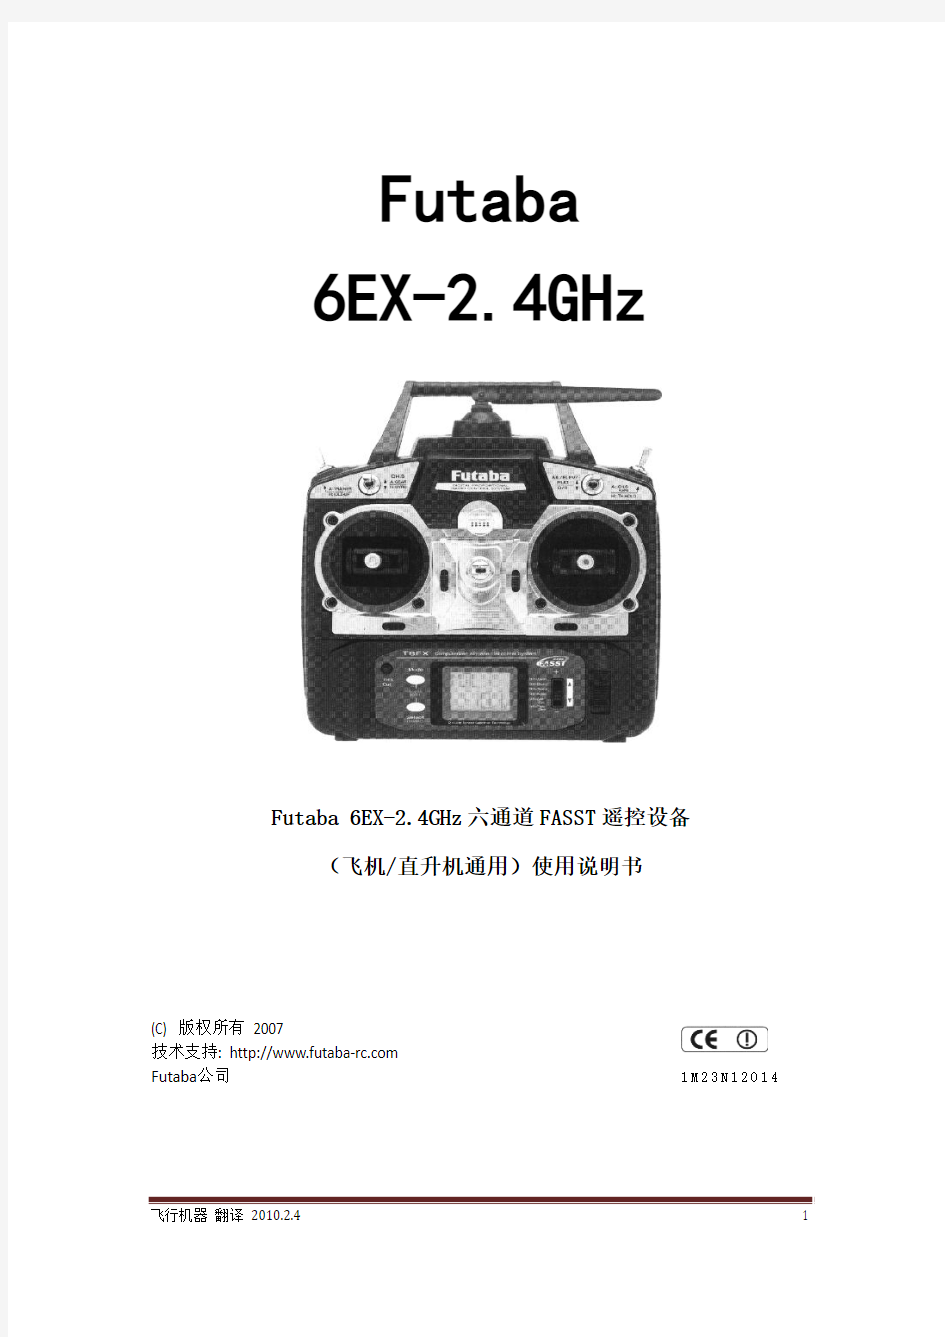 Futaba 6EX-2.4G 遥控设备中文说明书(pdf)